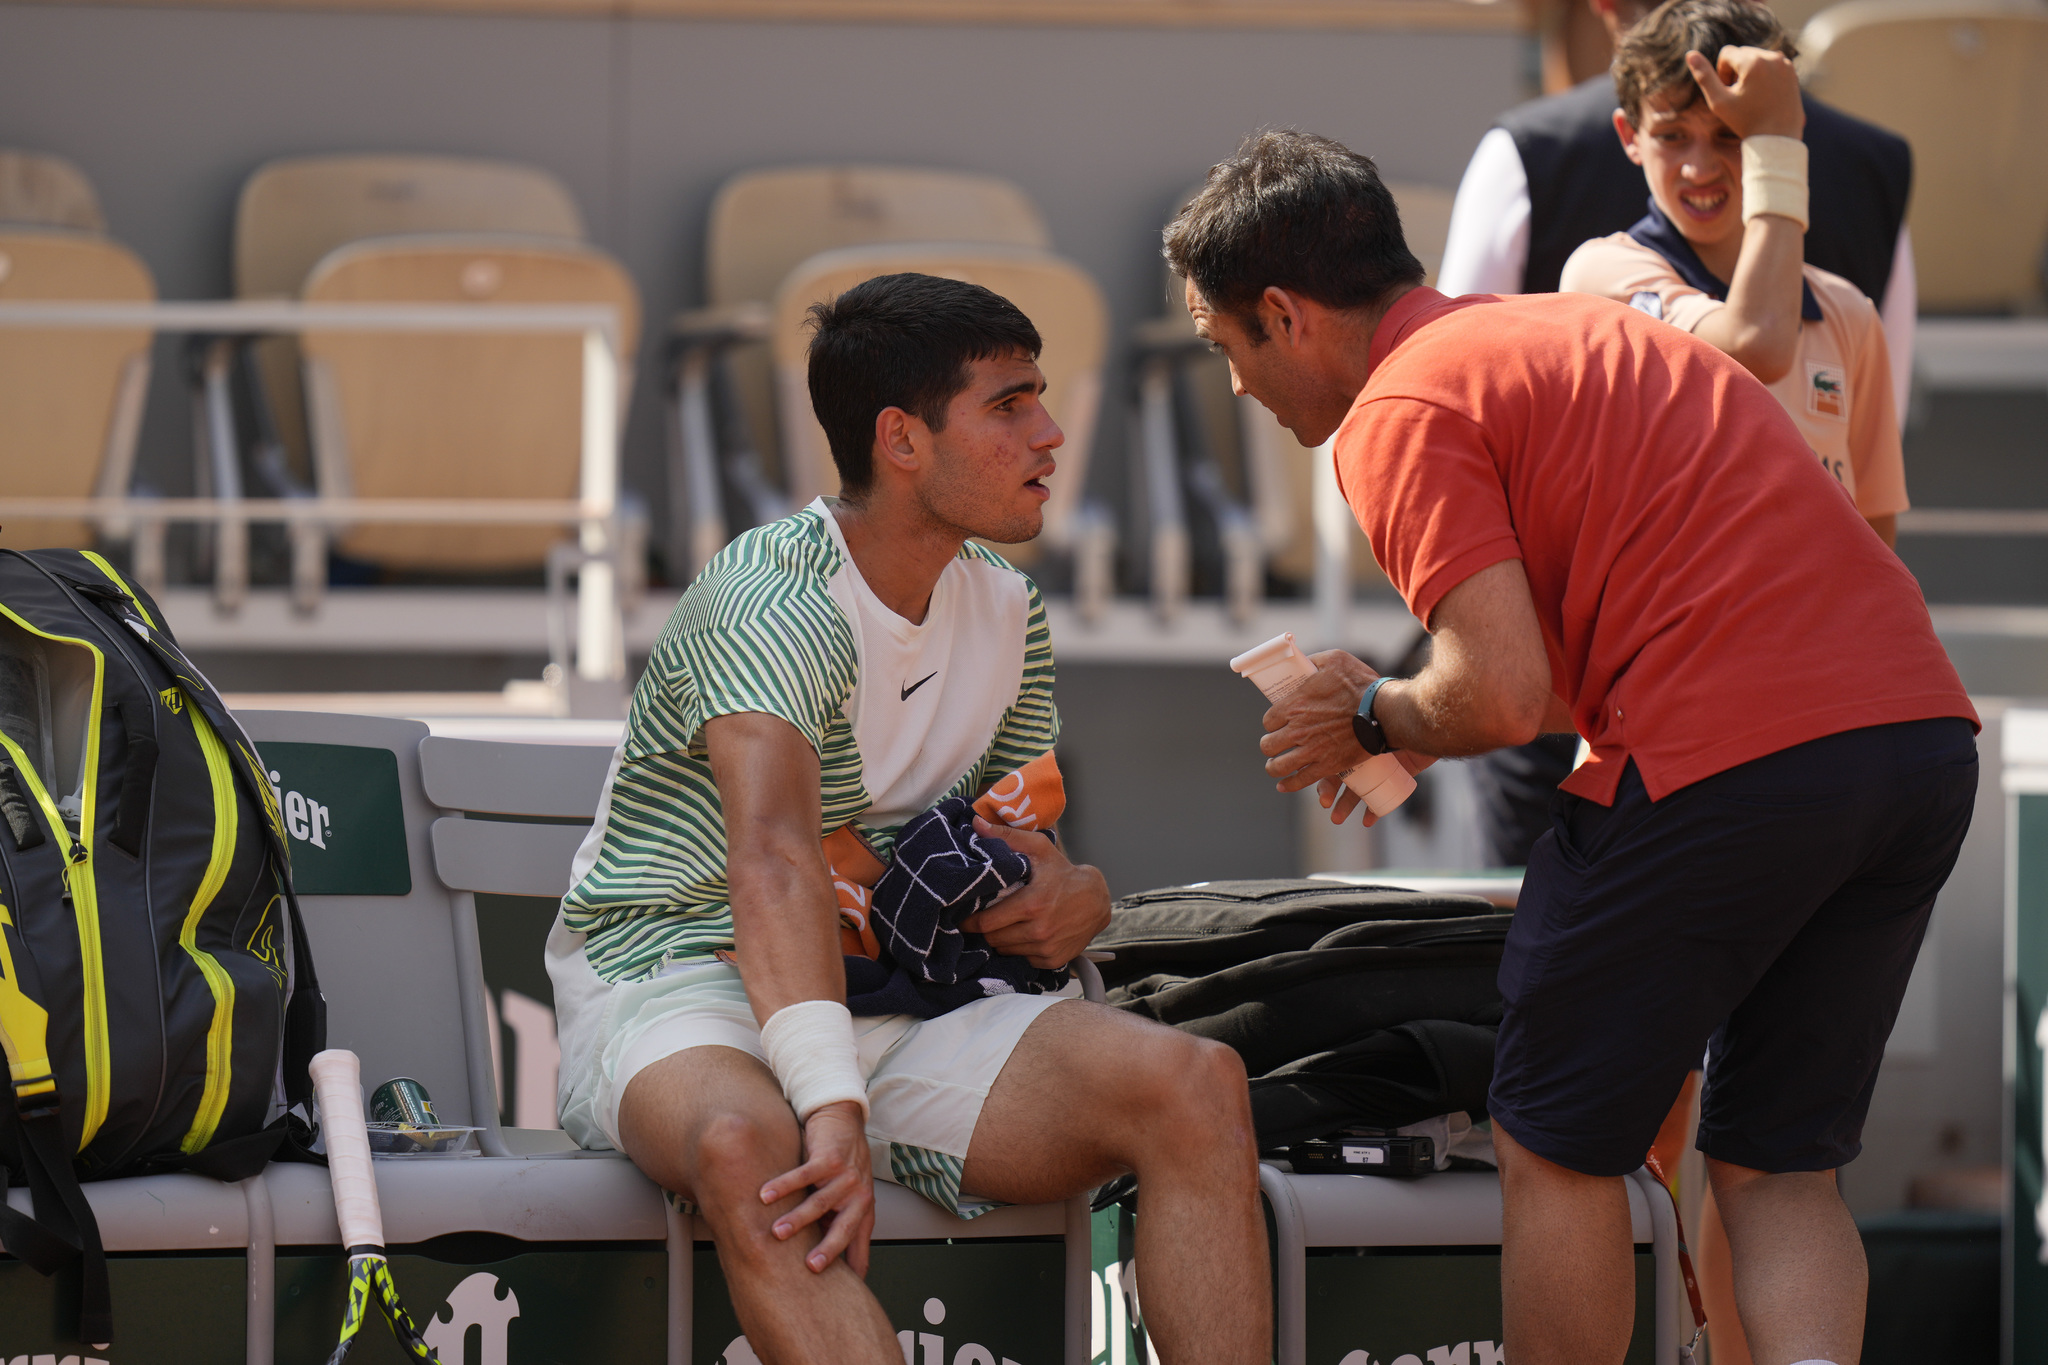 Leg injury hinders Alcaraz attempt to reach Roland Garros final against Djokovic